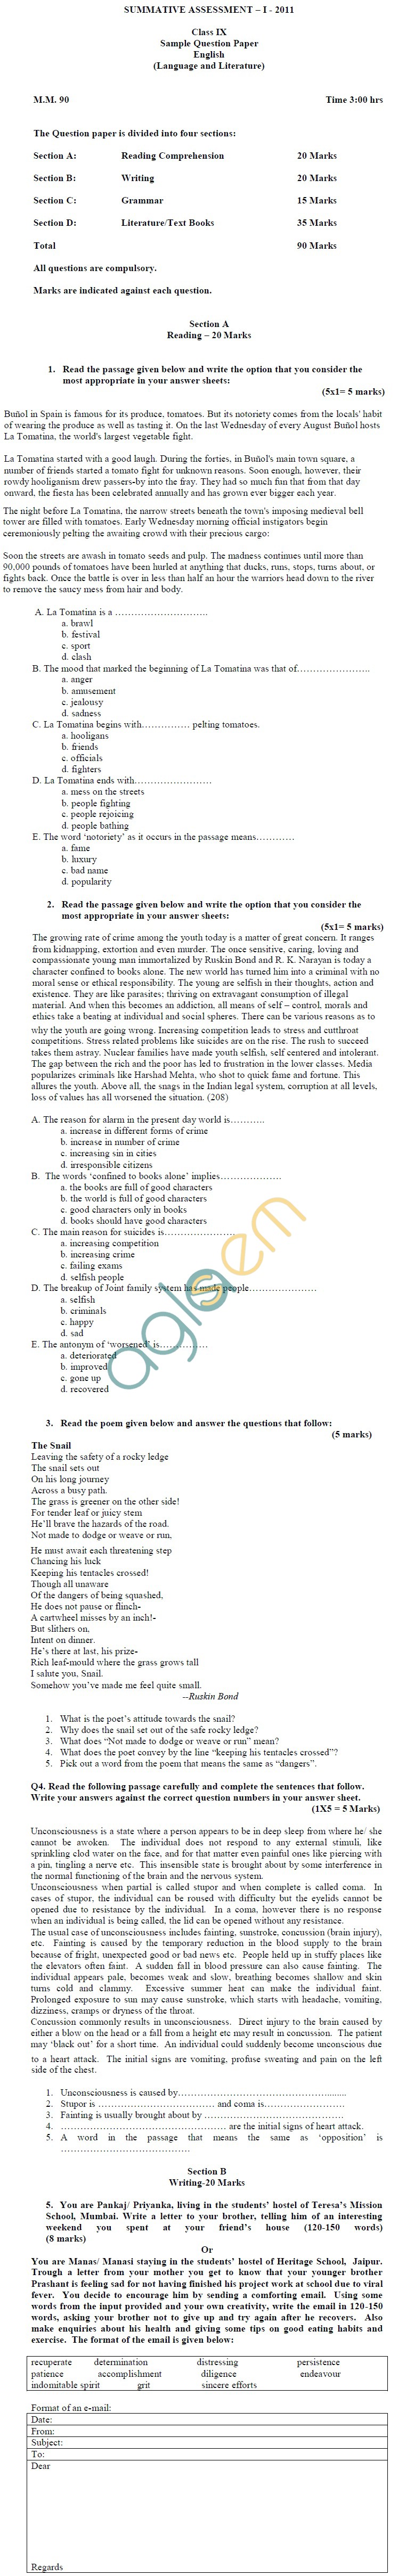 CBSE Board Exam 2013 Sample Papers (SA1) Class IX - English Lang. & Lit.